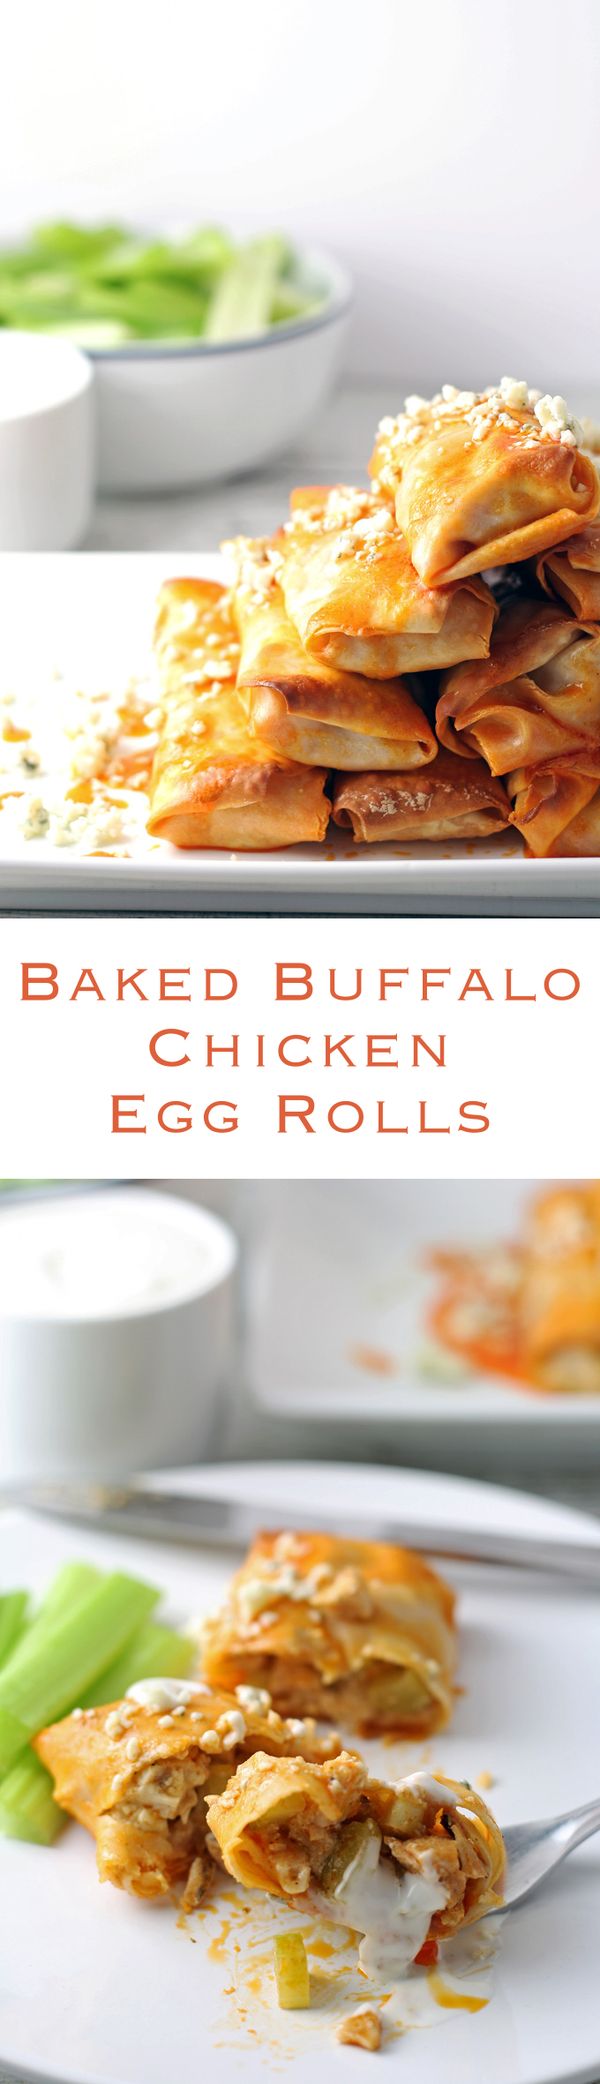 Baked Buffalo Chicken Egg Rolls